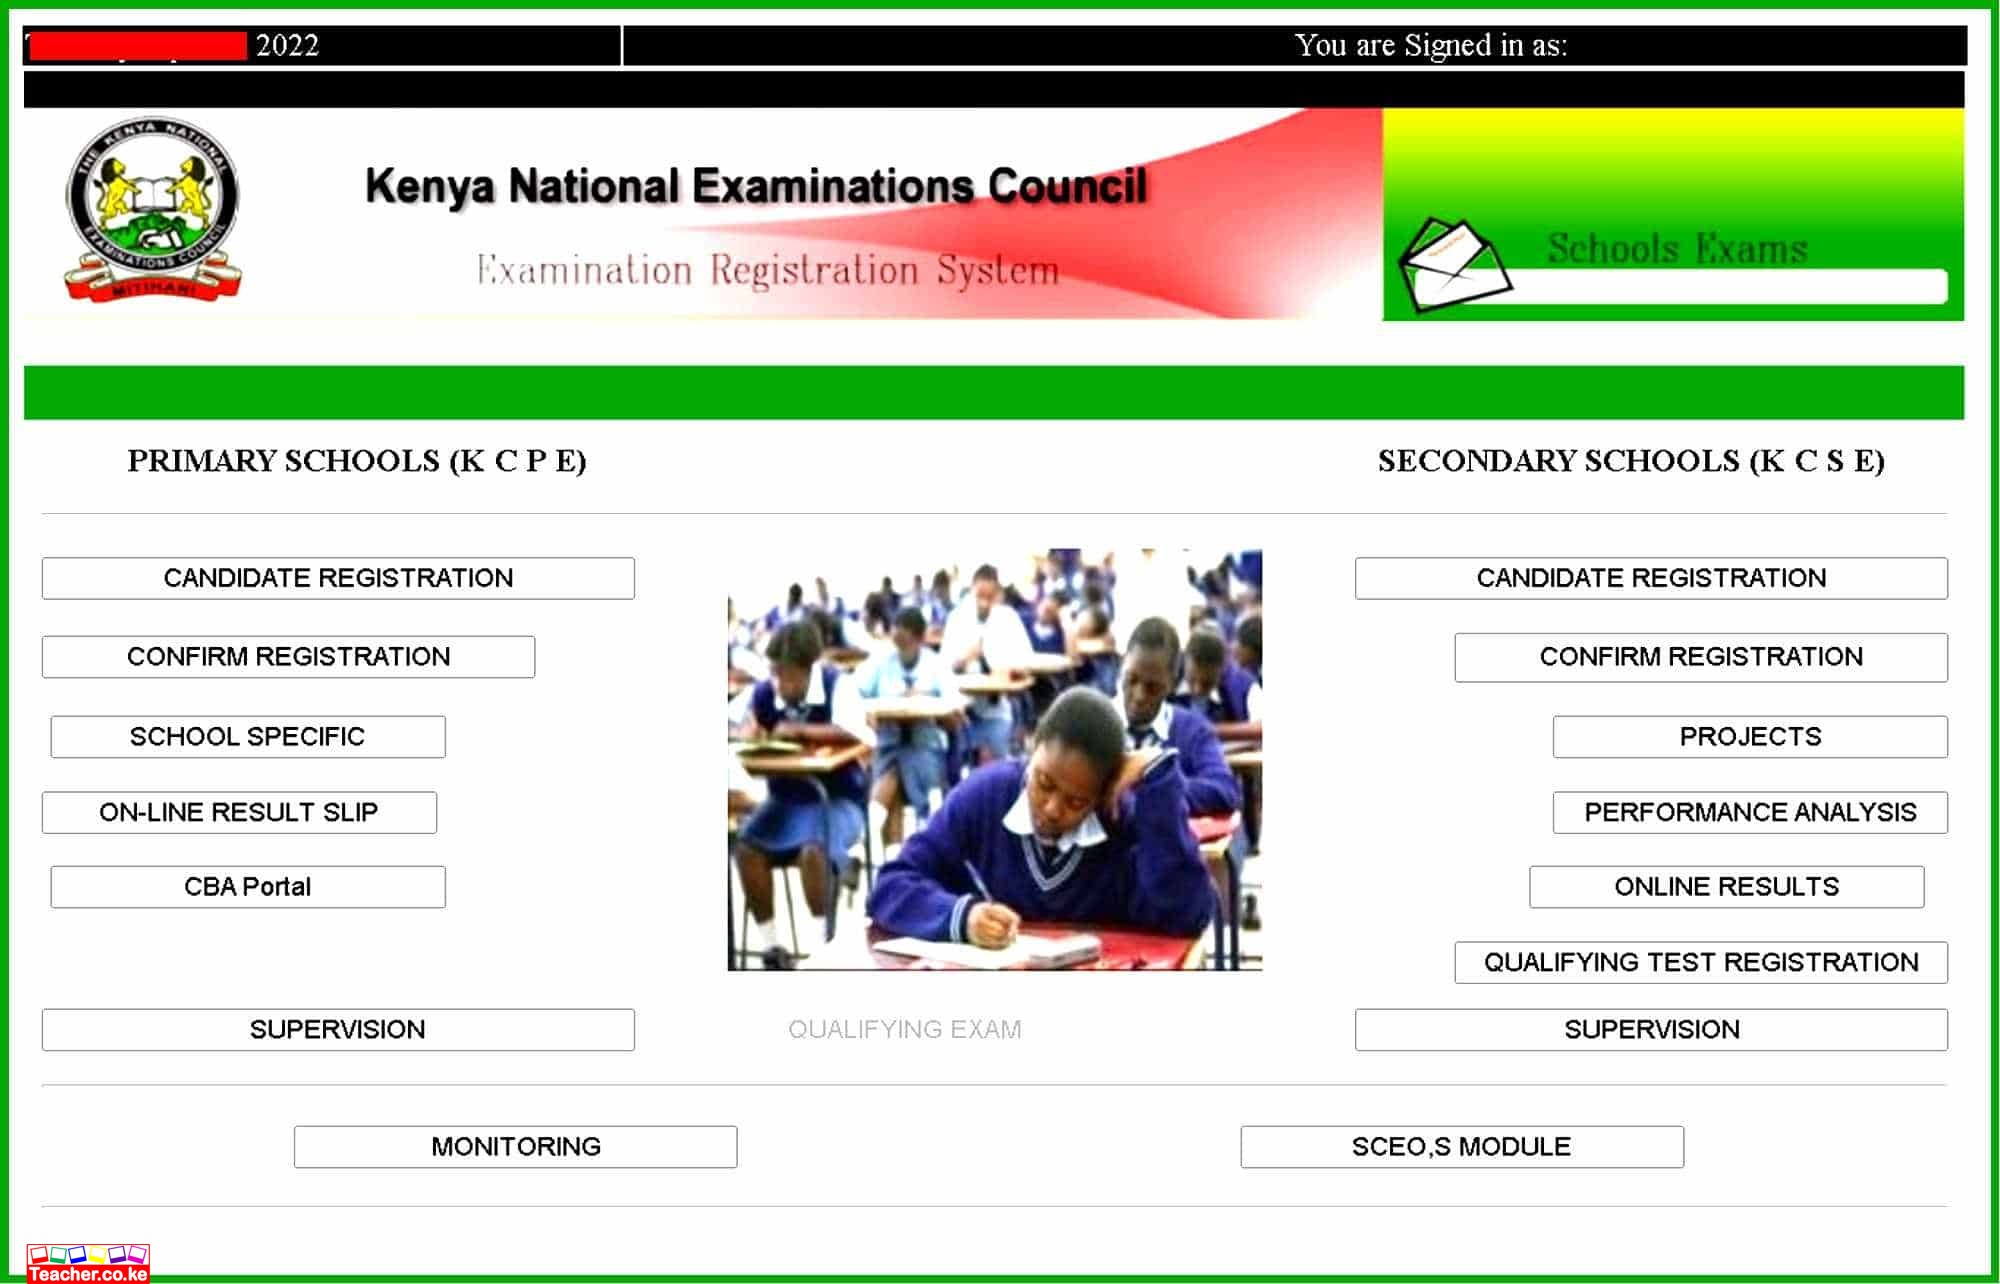 Ikuu Boys High School 2021 KCSE Results